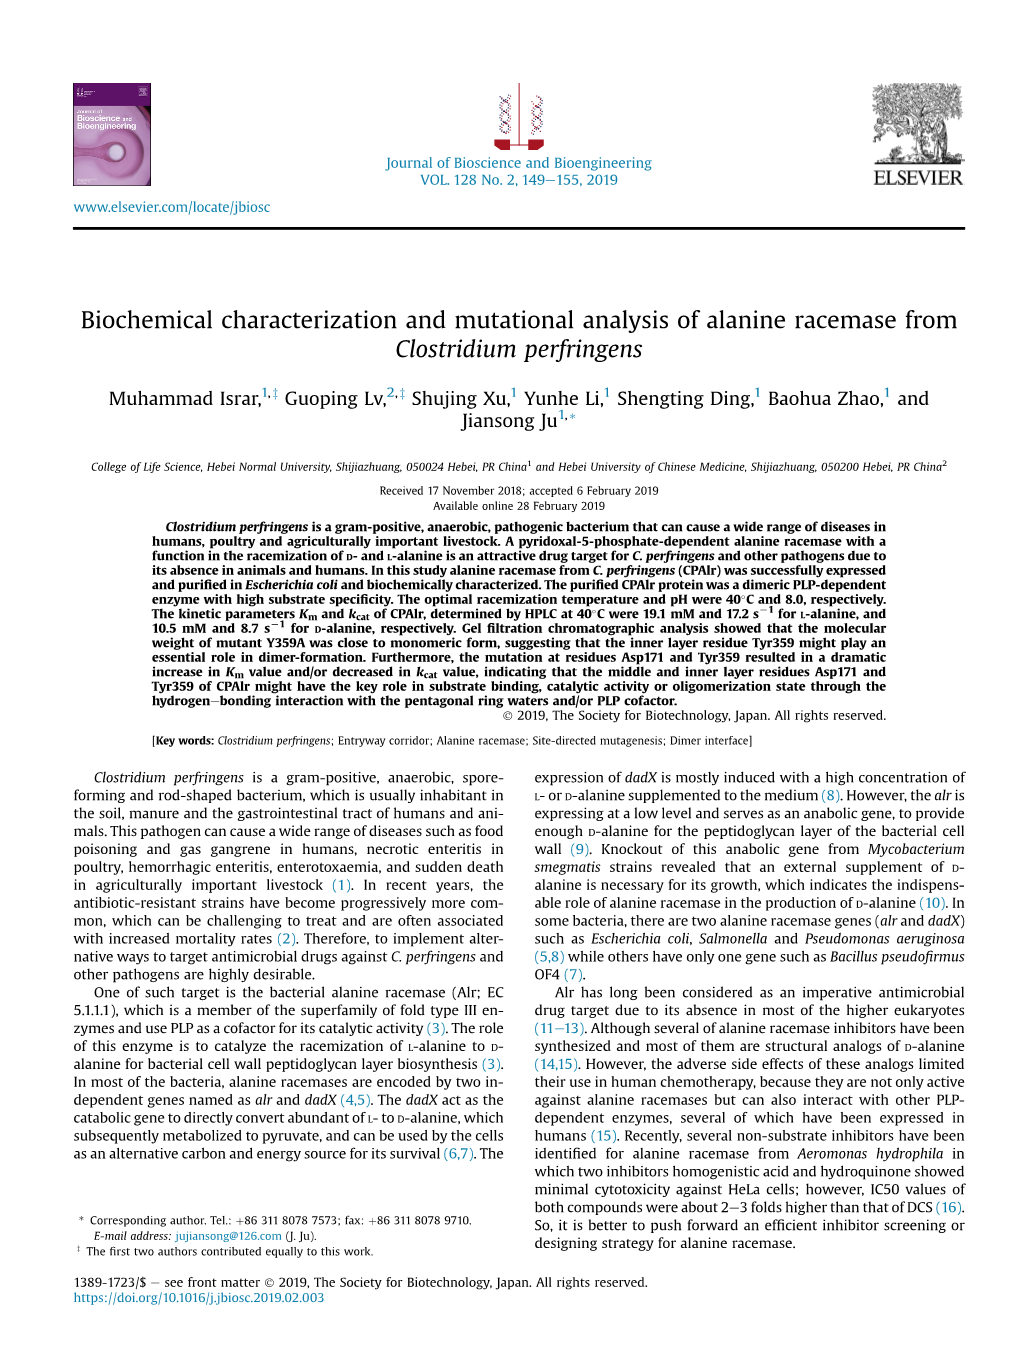 Biochemical Characterization and Mutational Analysis of Alanine Racemase from Clostridium Perfringens